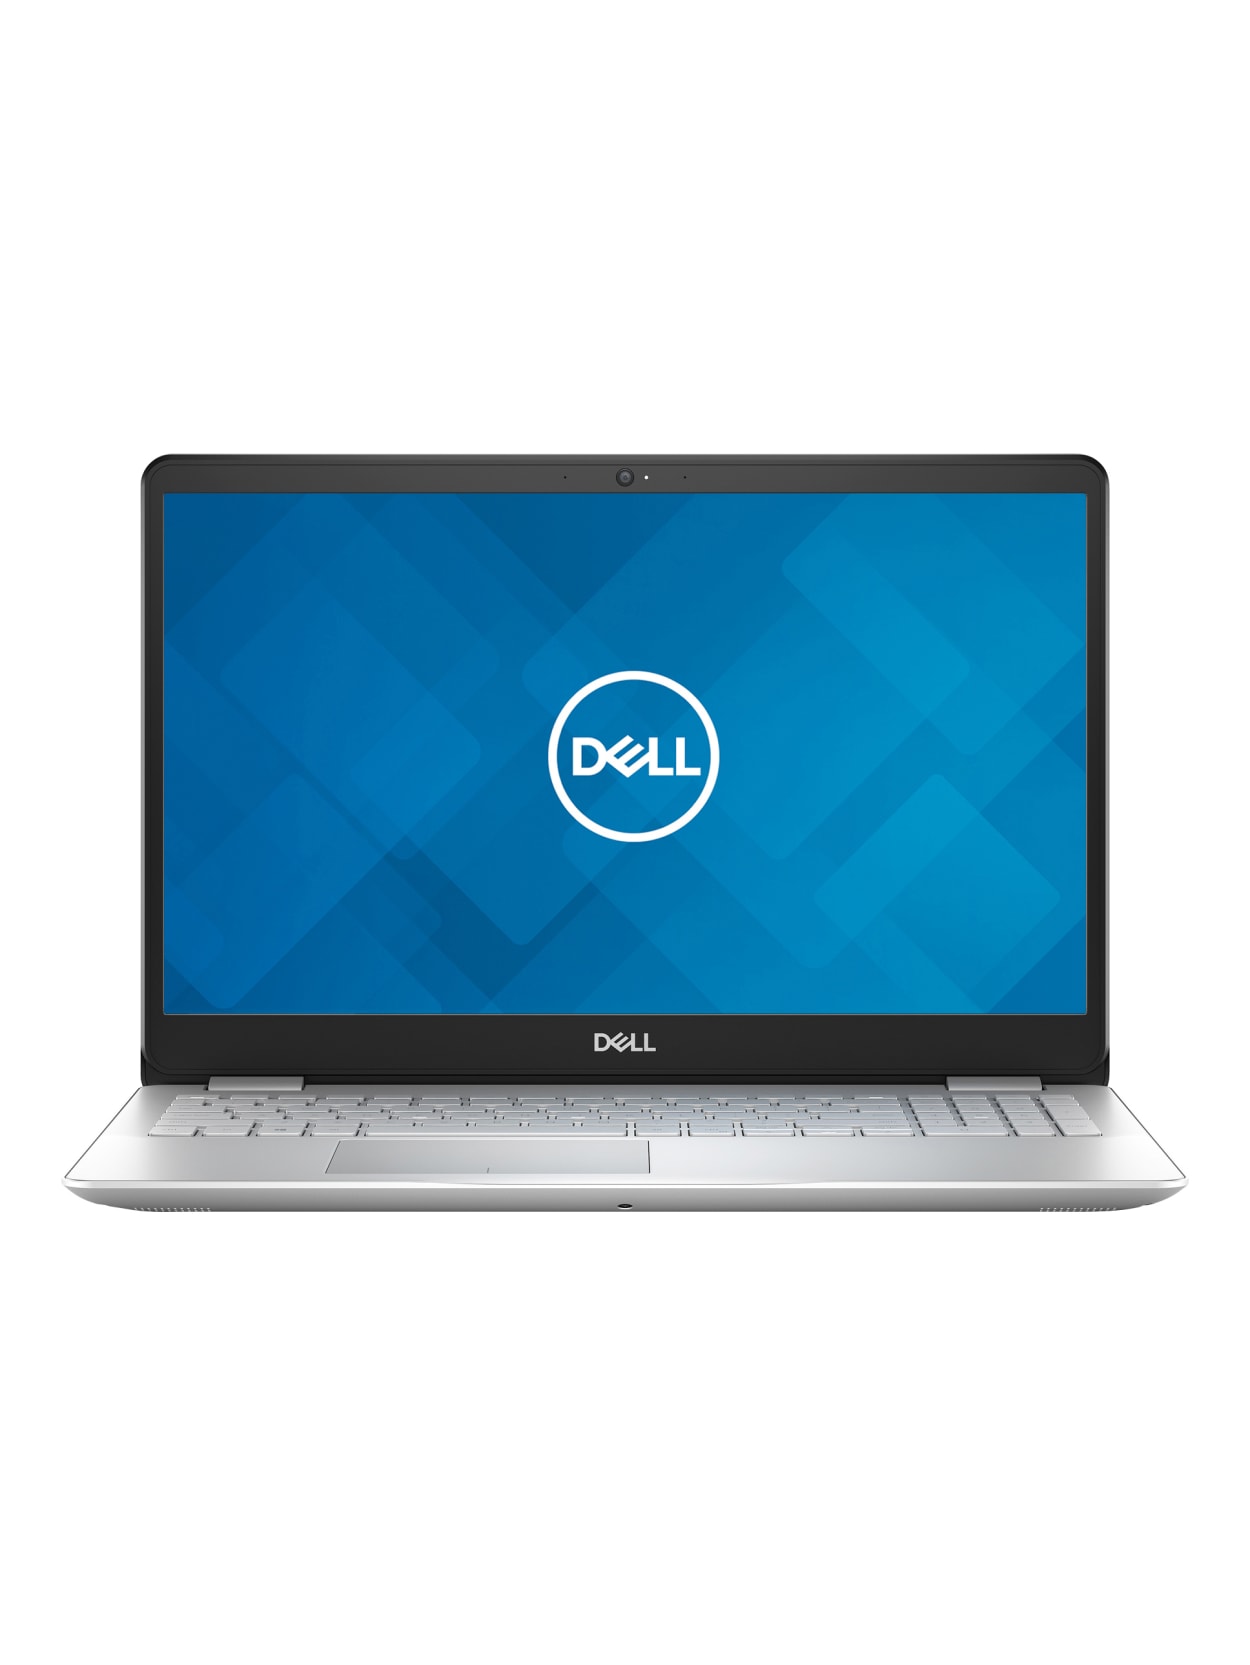 Dell Inspiron 15 5584 Laptop 15 6 Full Hd Screen Intel Core I7 8565u 8gb Memory 256gb Solid State Drive Windows 10 Home Office Depot